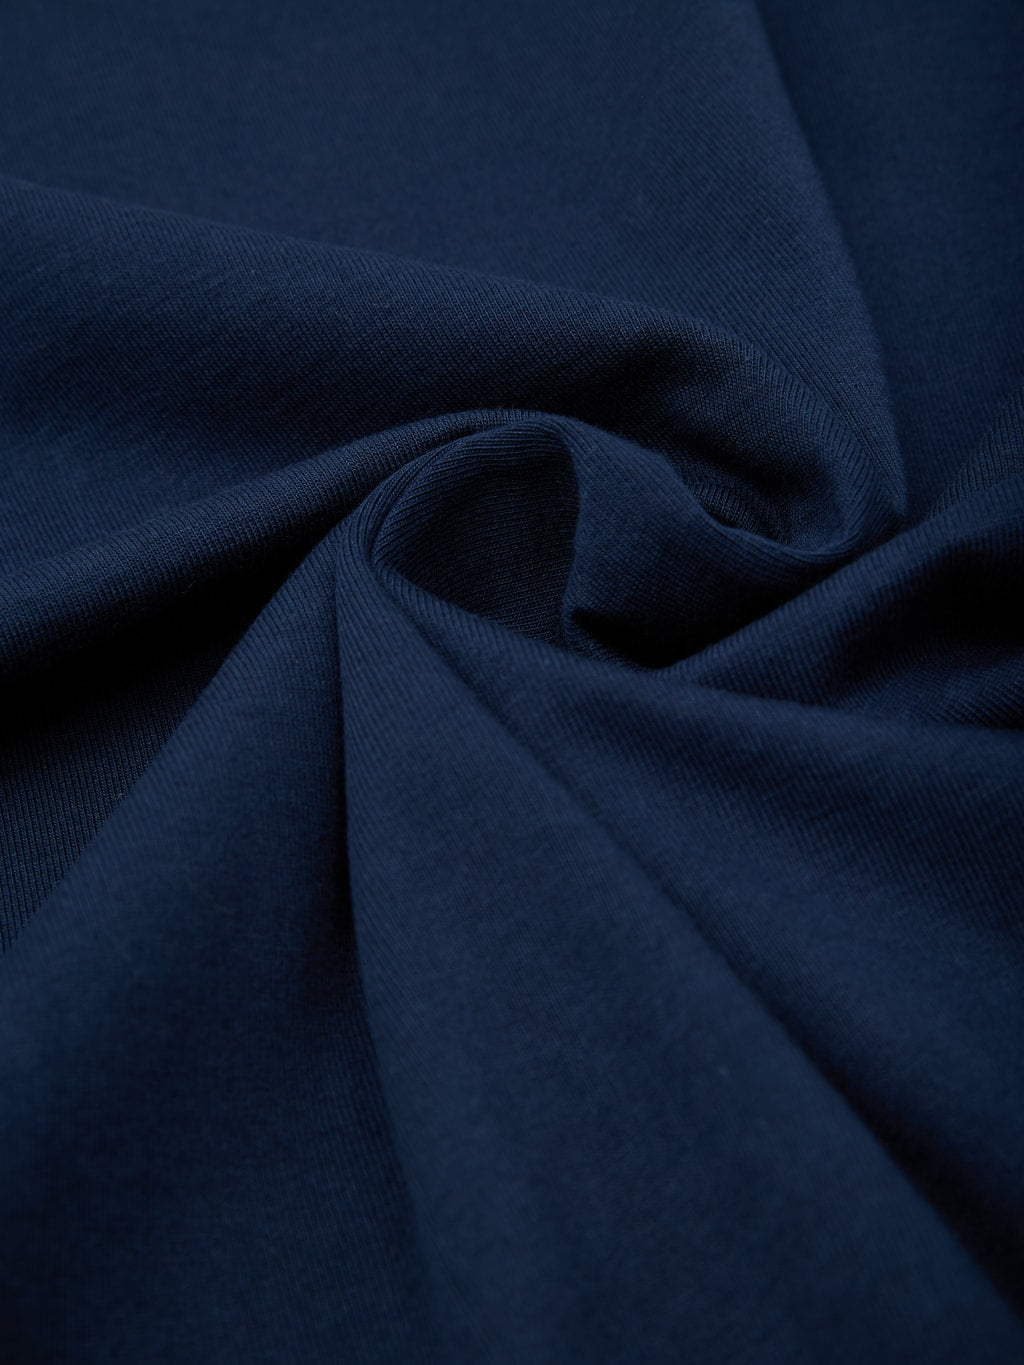 merz b schwanen good originals loopwheeled Tshirt classic fit blue cotton texture